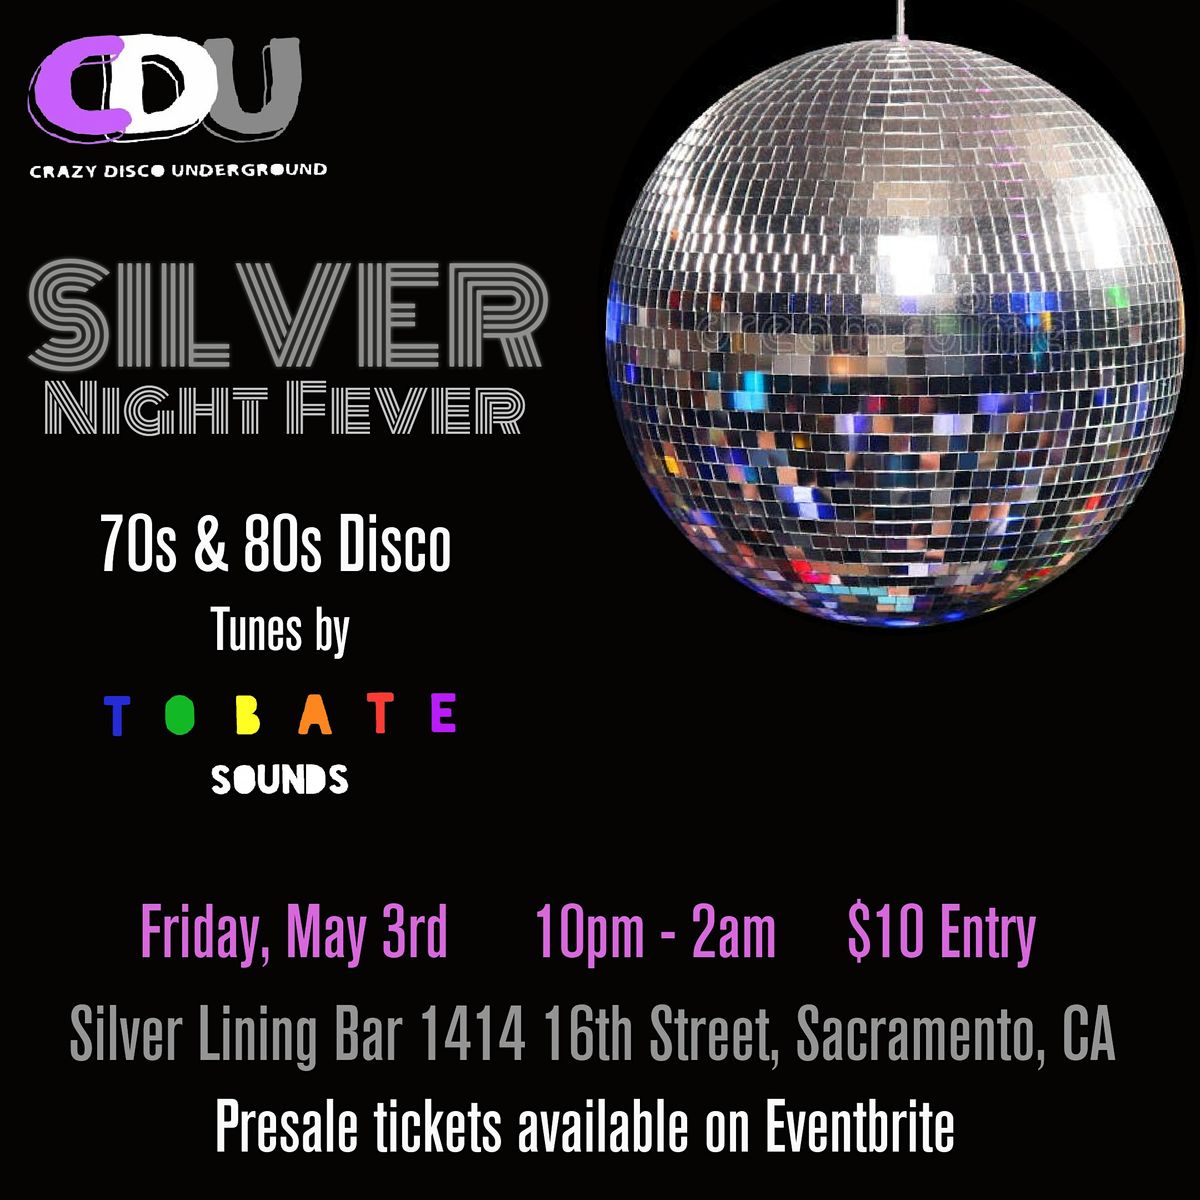 Crazy Disco Underground "Silver Night Fever"